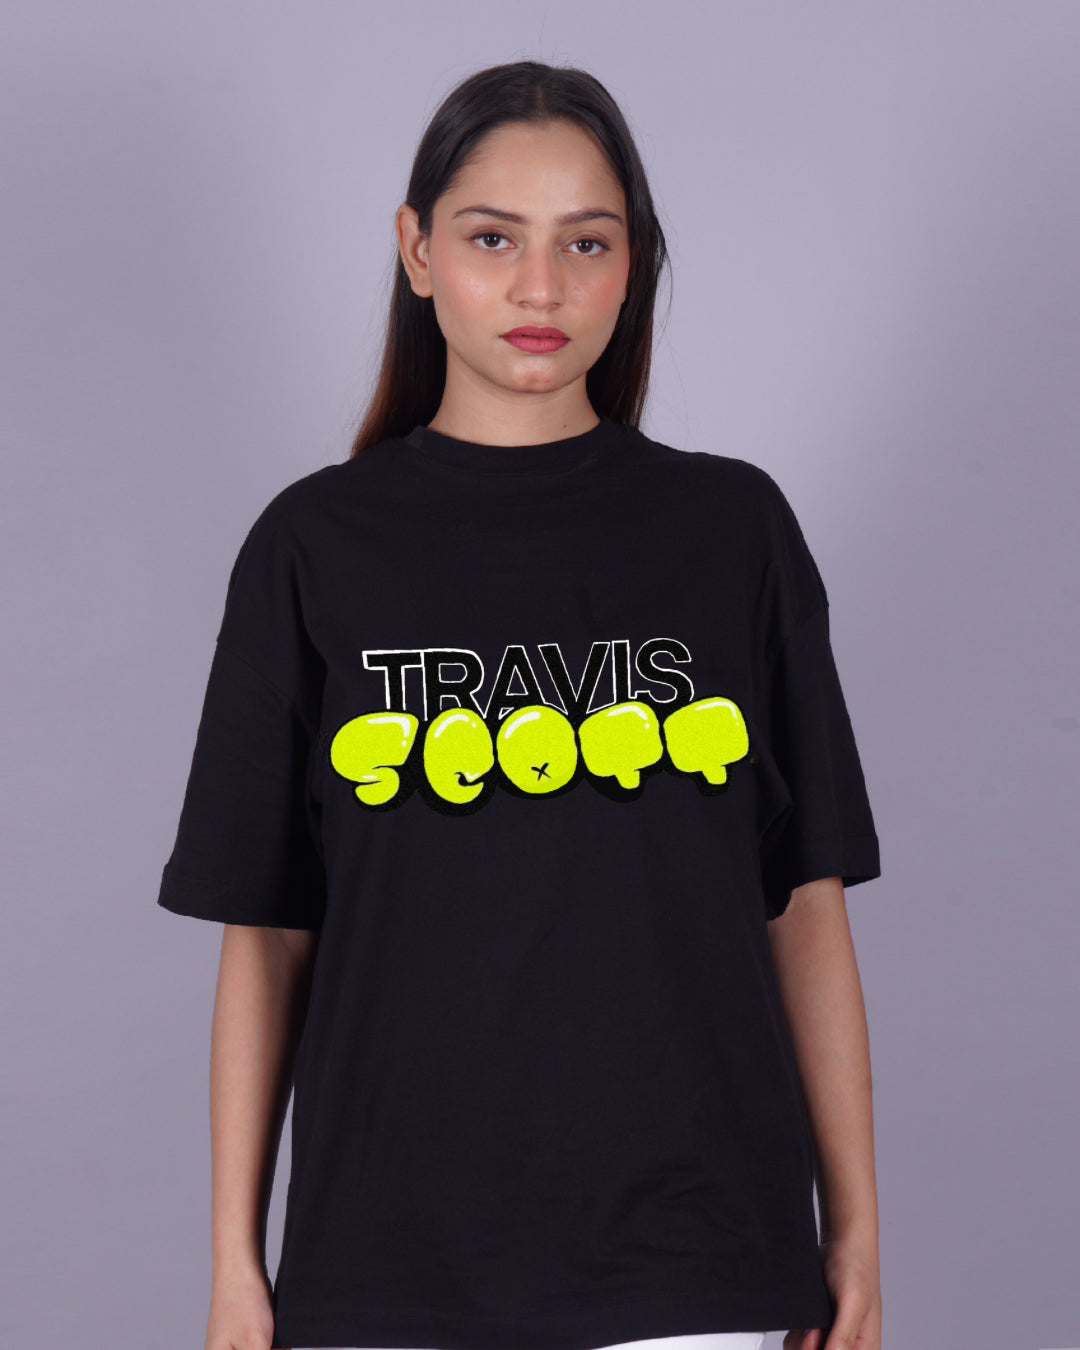 Women's T-Shirt Combo: Pack of 2 Travis Oversized Tees - Travis 1.0 & Trippy